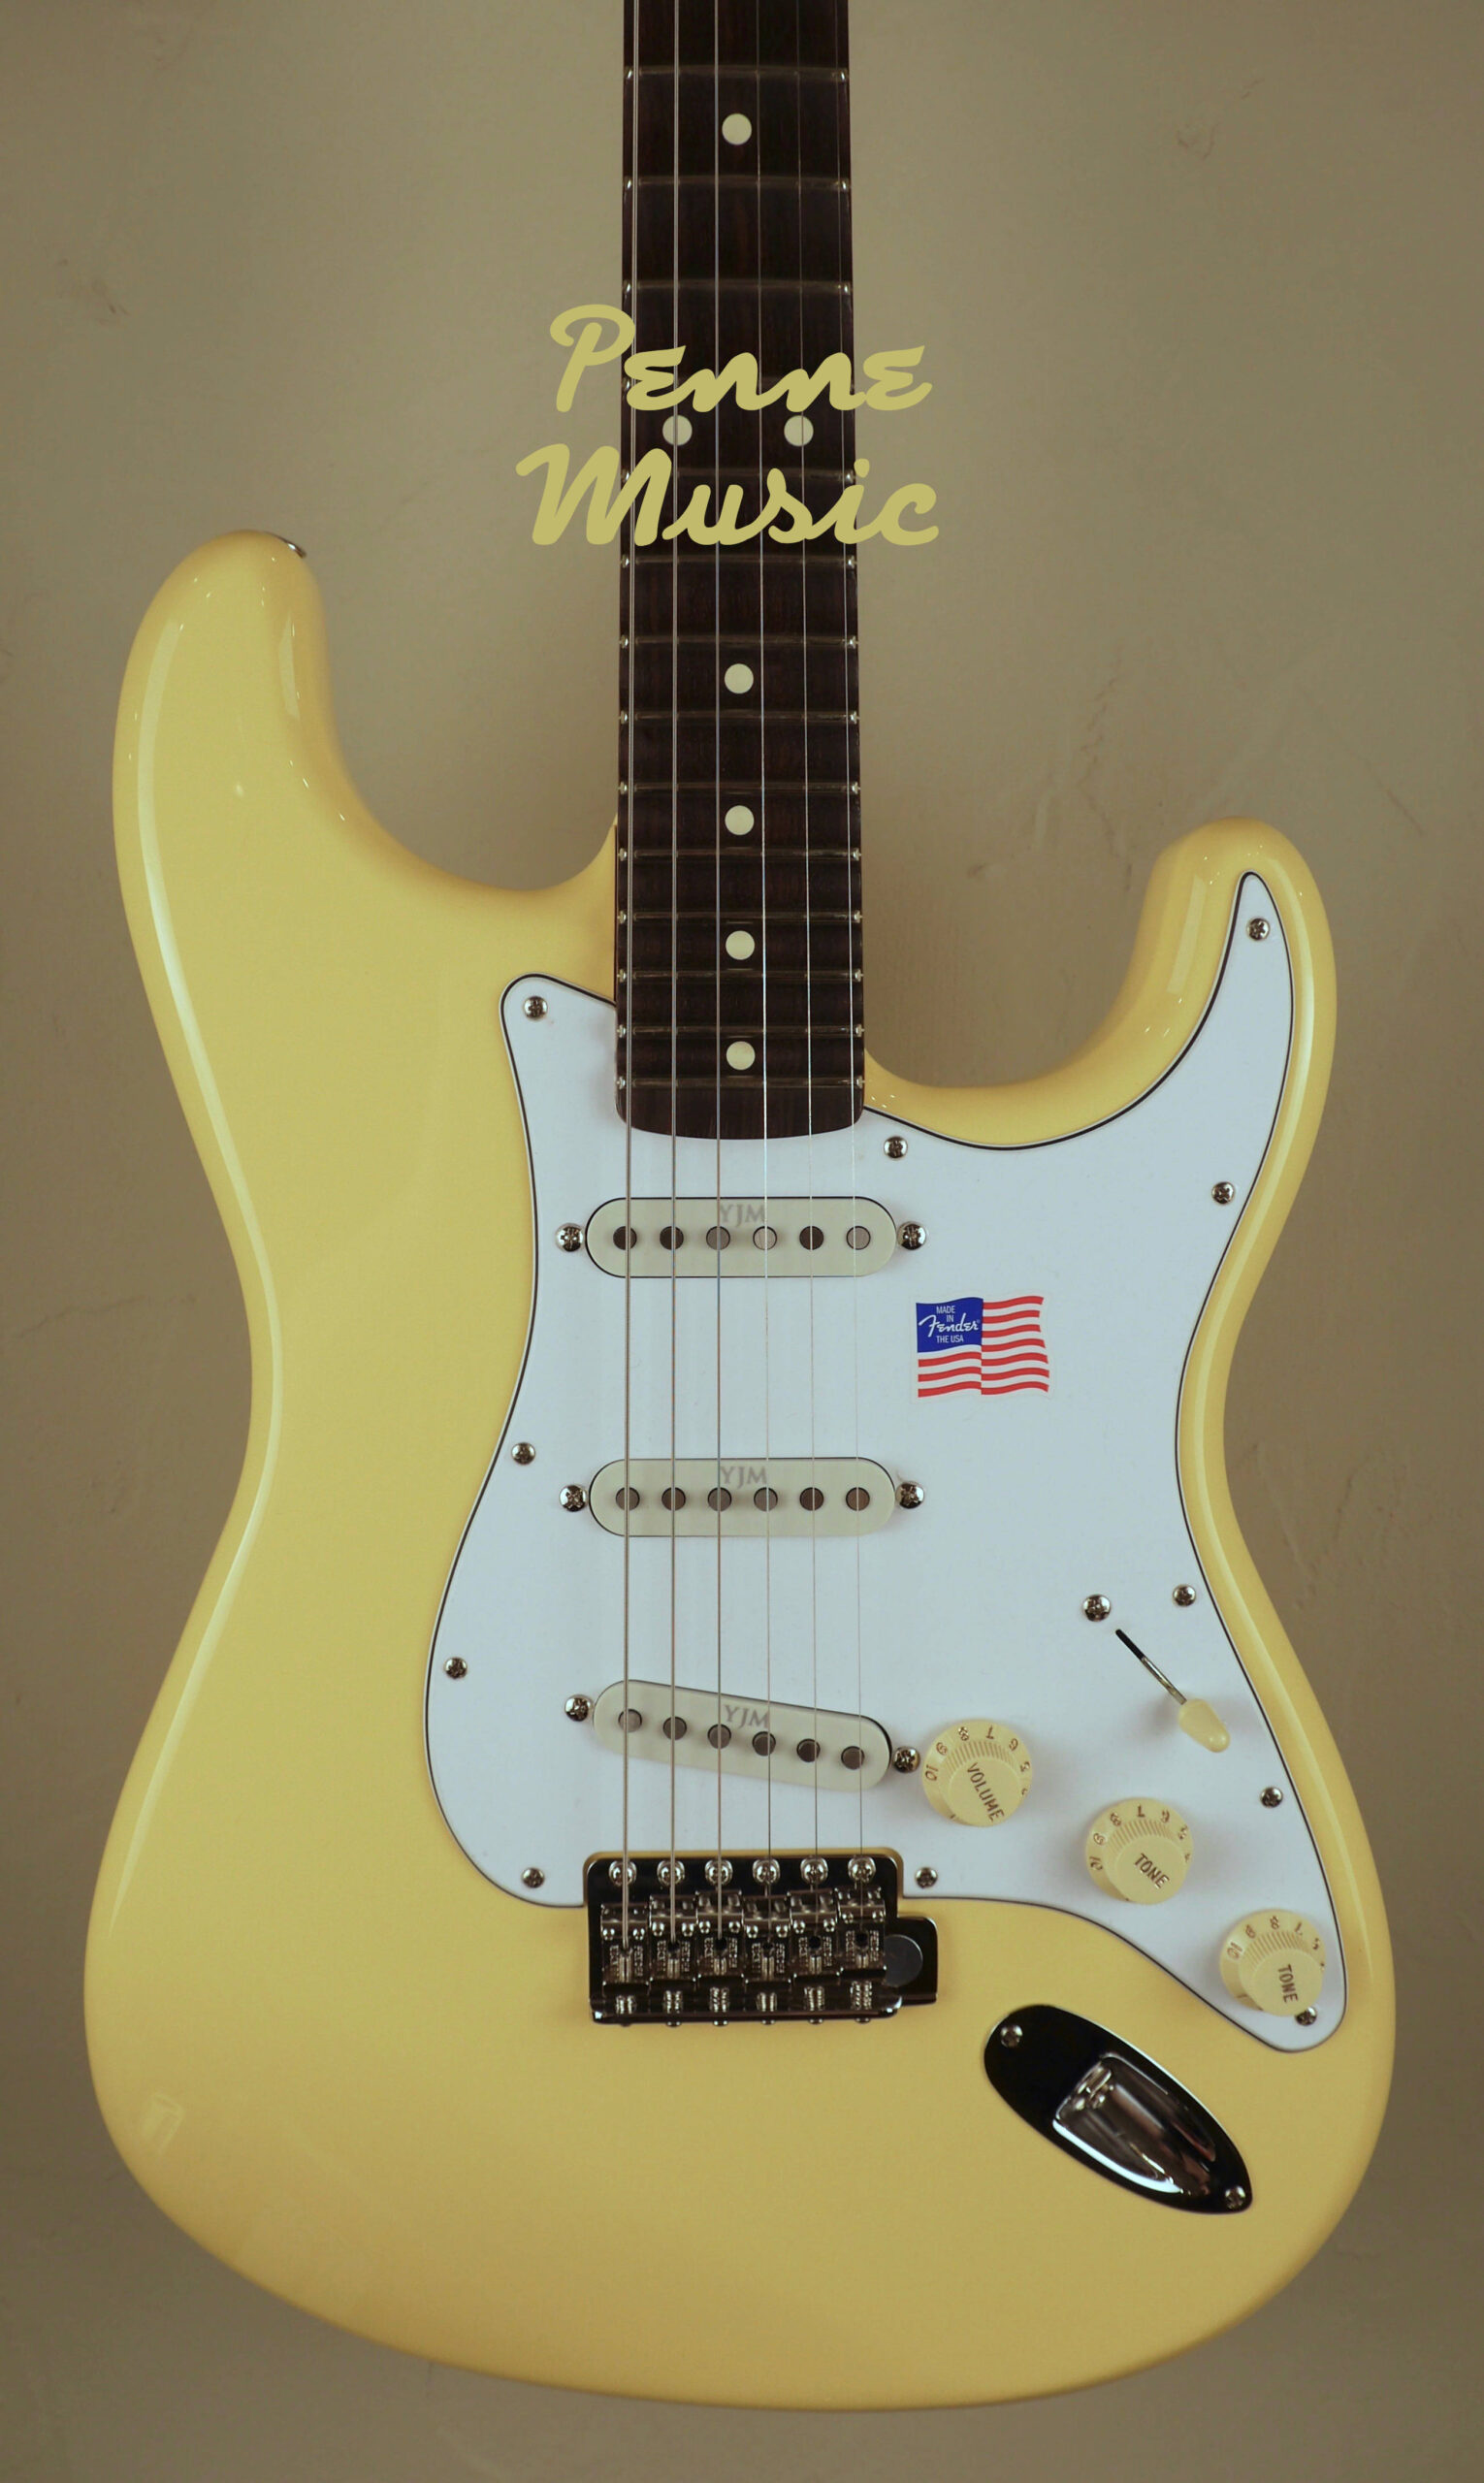 Fender Yngwie Malmsteen Stratocaster Vintage White RW 4